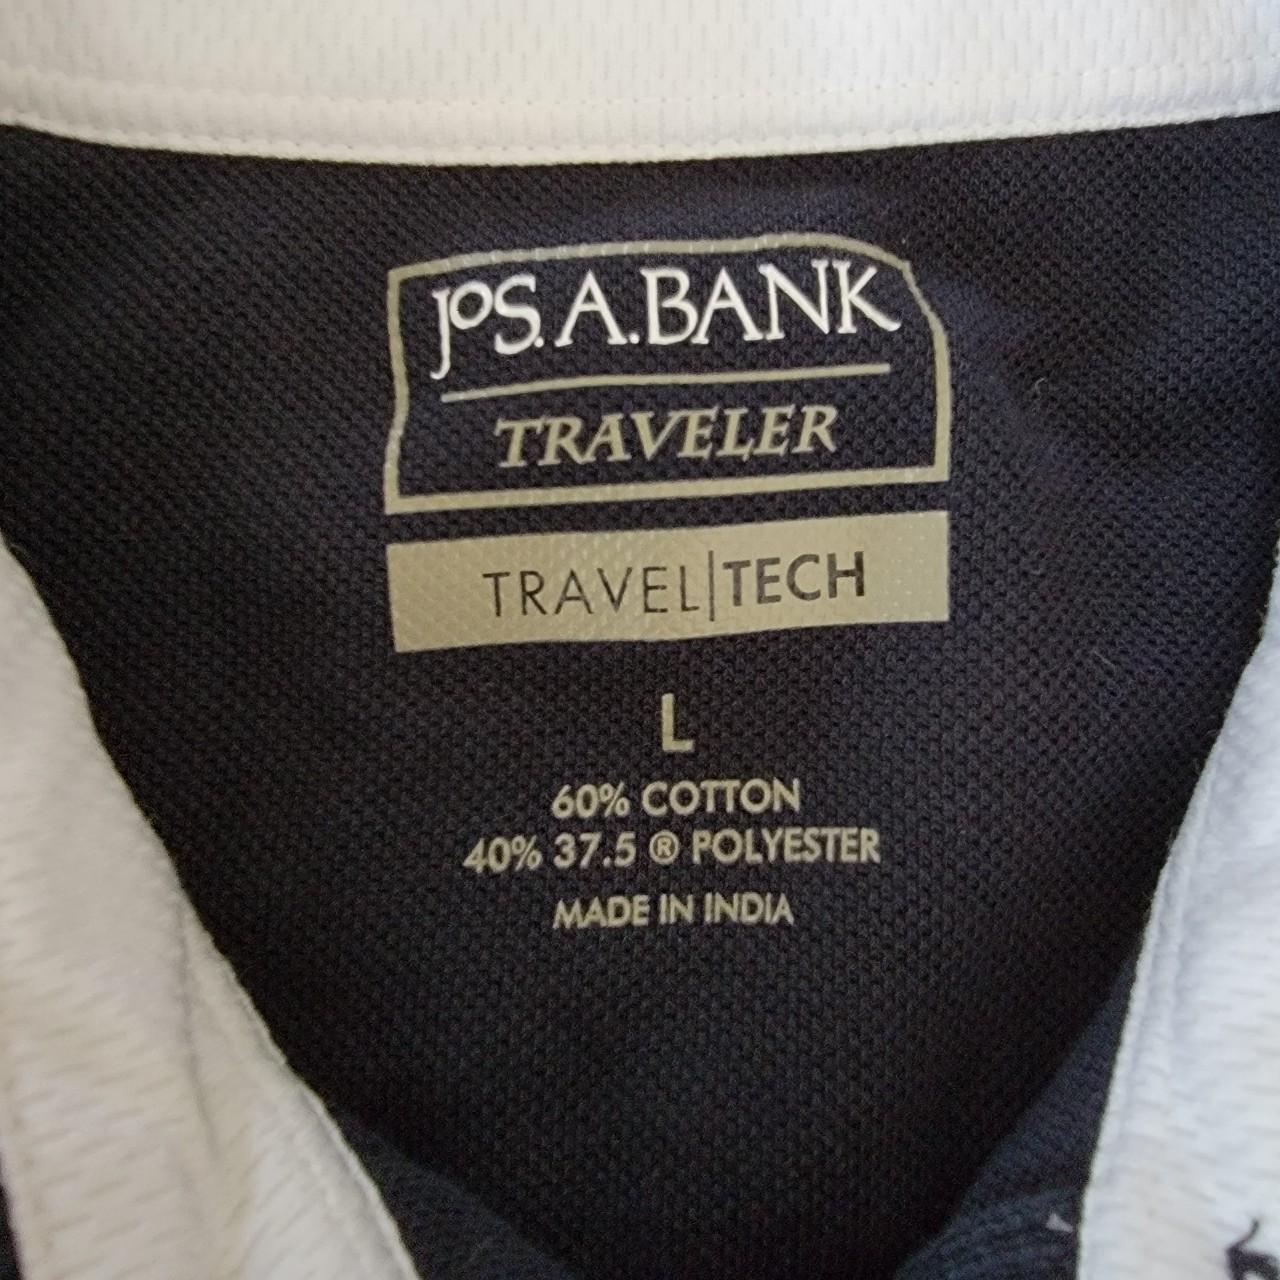 Product Image 4 - OS. A. BANK Traveler Travel